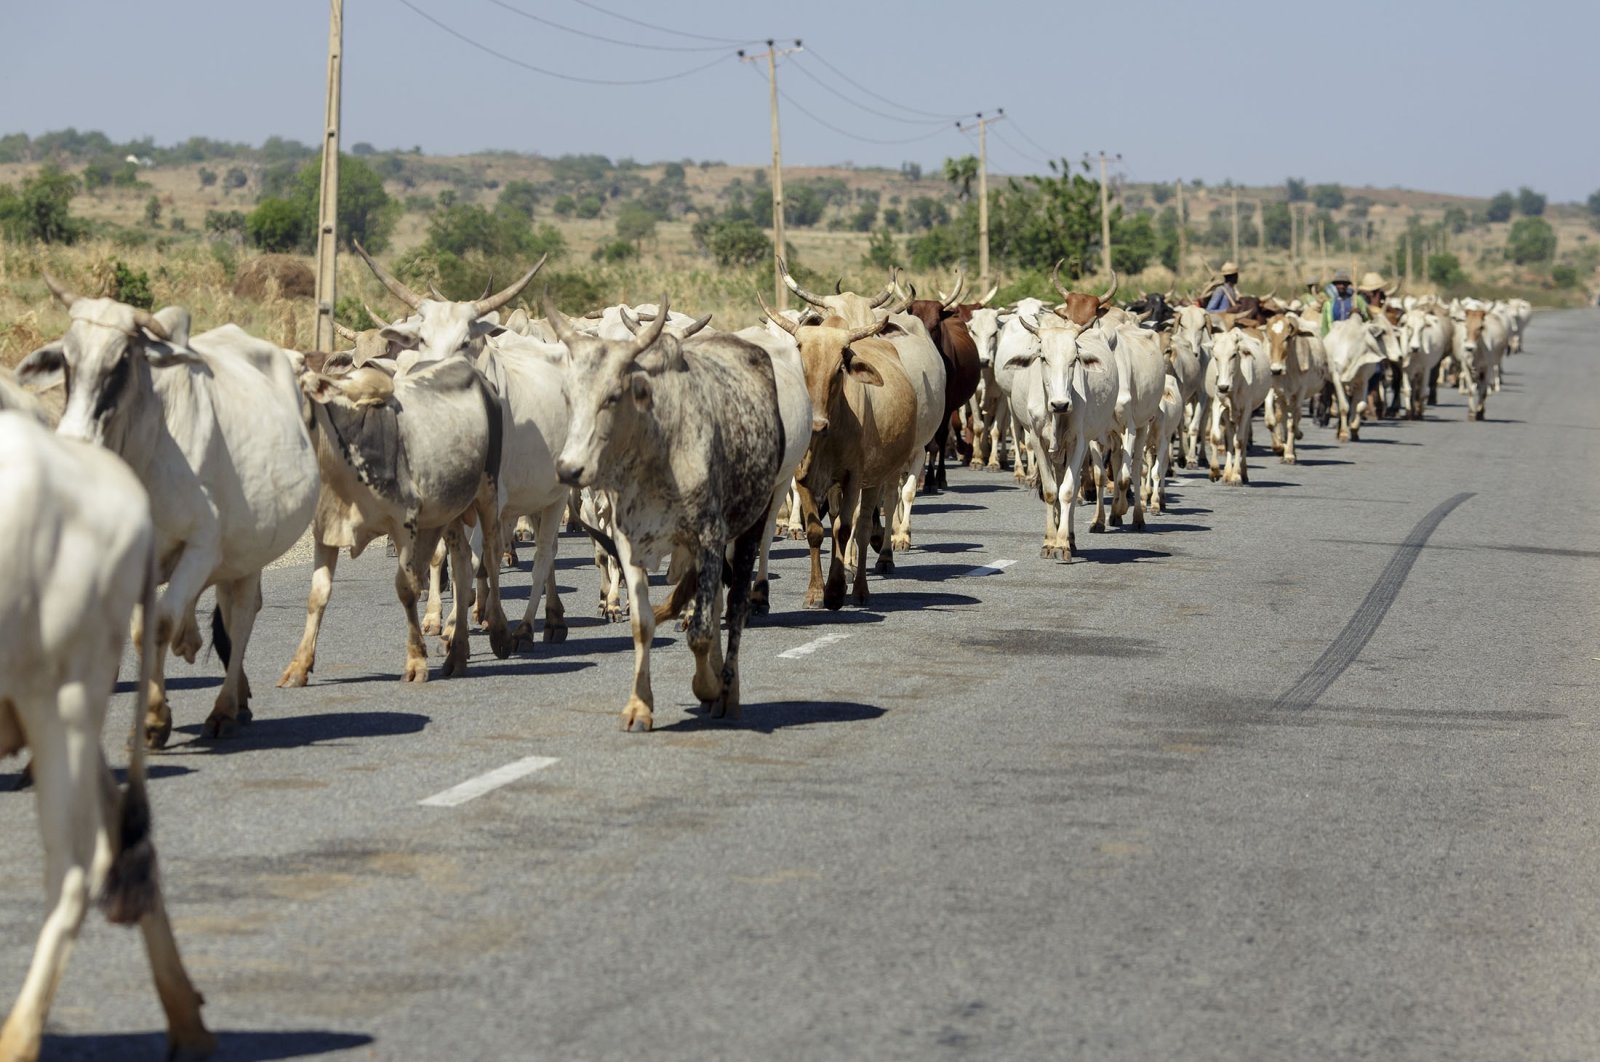 A herd of cattles on a street close to Suru in Birnin Kebbi, Nigeria, Nov. 14, 2018. (Getty Images Photo)